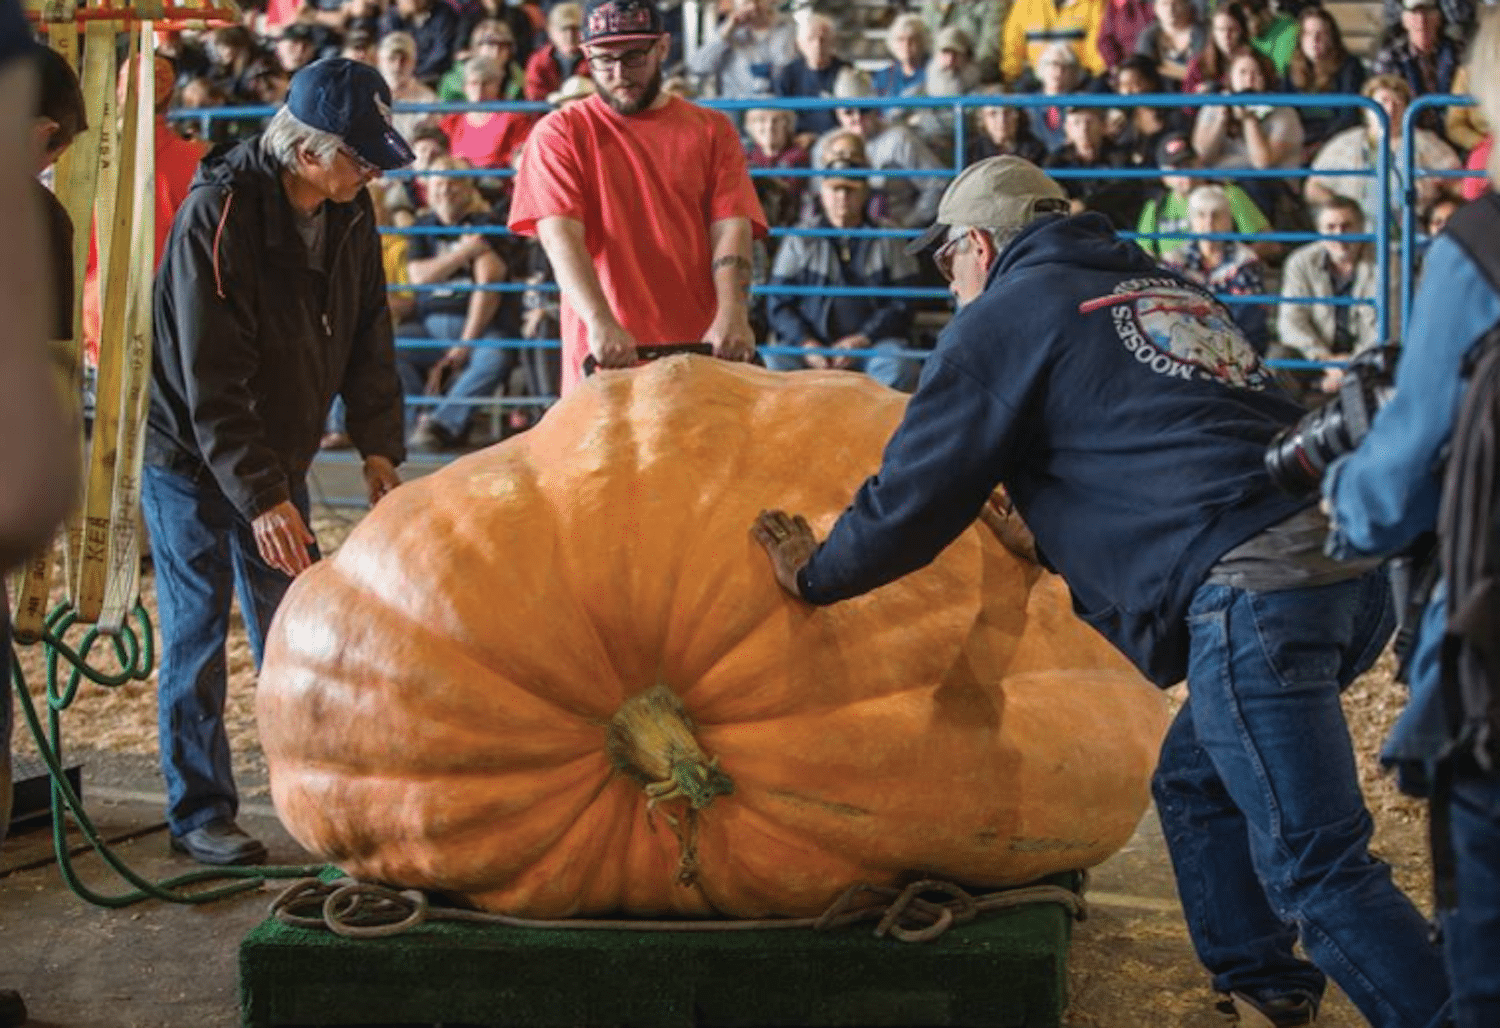 This man's giant pumpkin set a new record at the Alaska State Fair